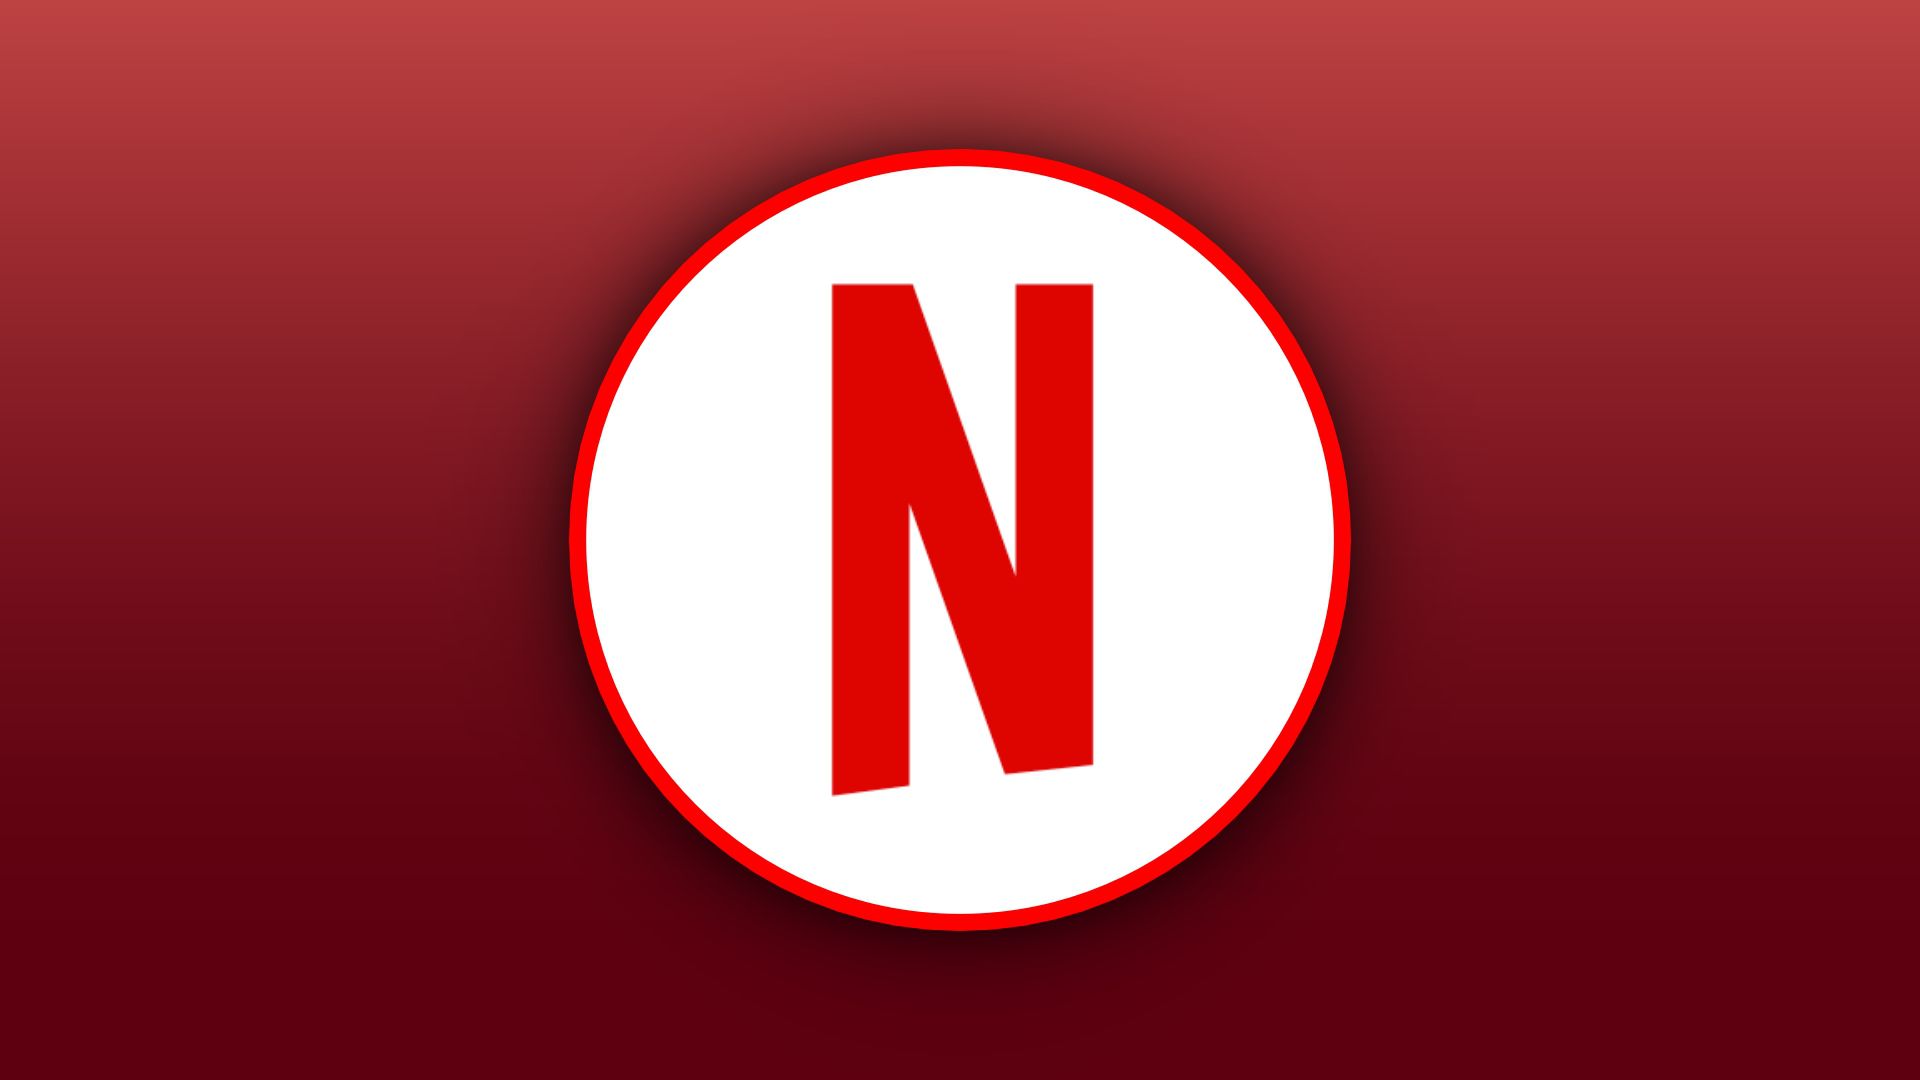 Códigos Netflix Grátis 2023 - Lista de Códigos (Atualizado)